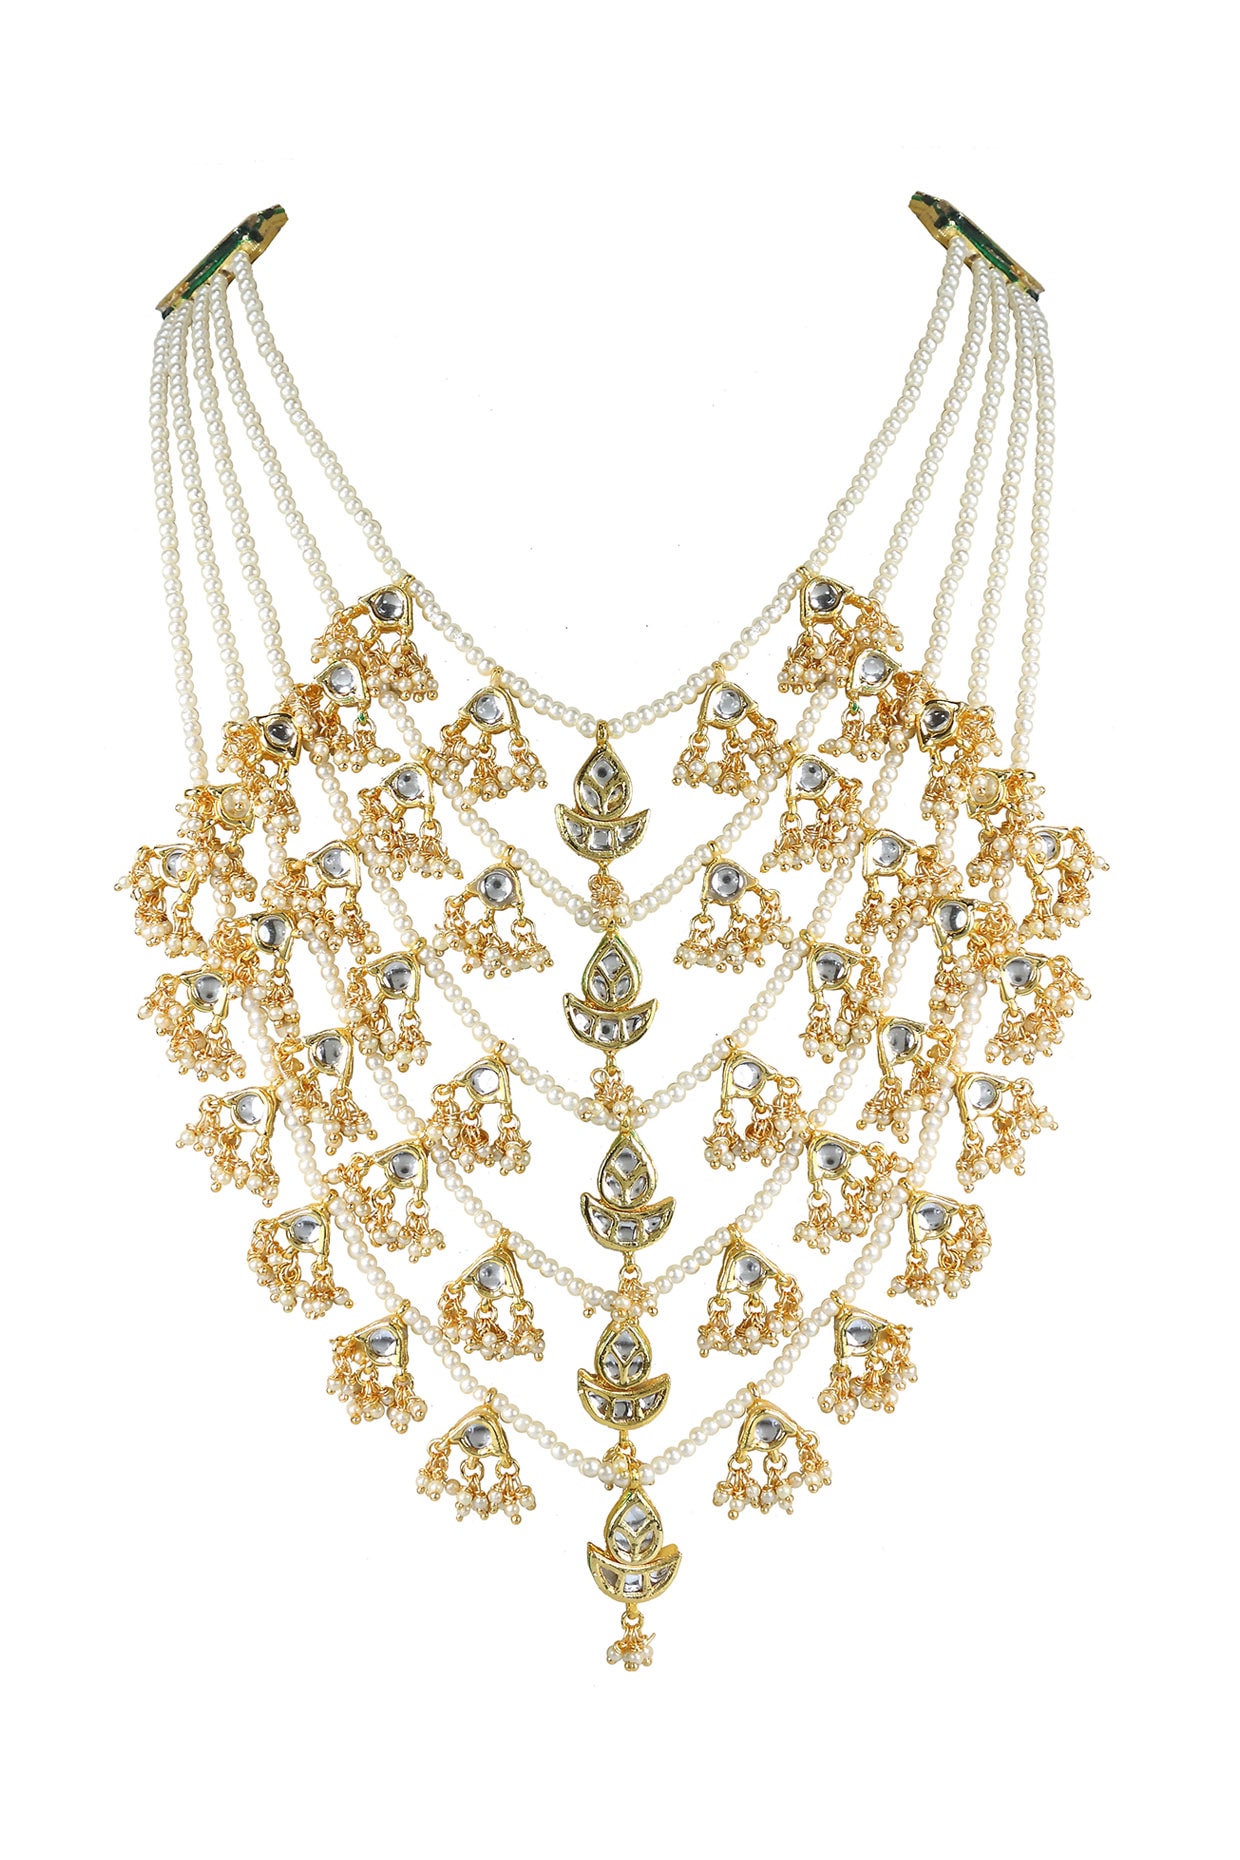 antique jadtar bridal necklace set in Ahmedabad at best price by Sarkar  Jewellers PVT LTD - Justdial